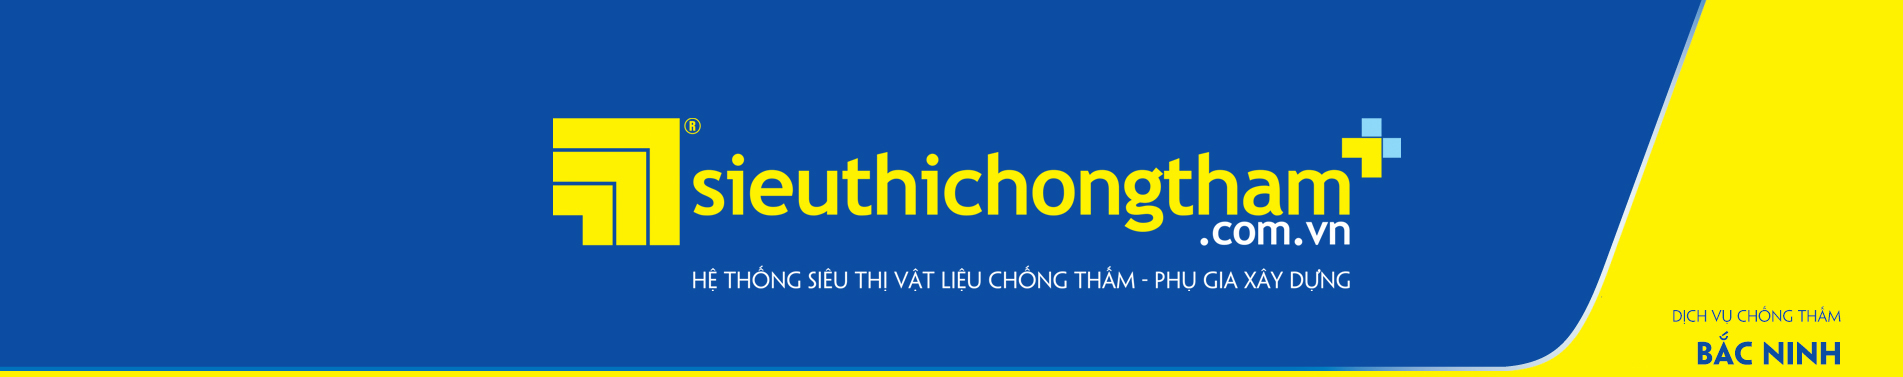 Dich vu chong tham Bac Ninh